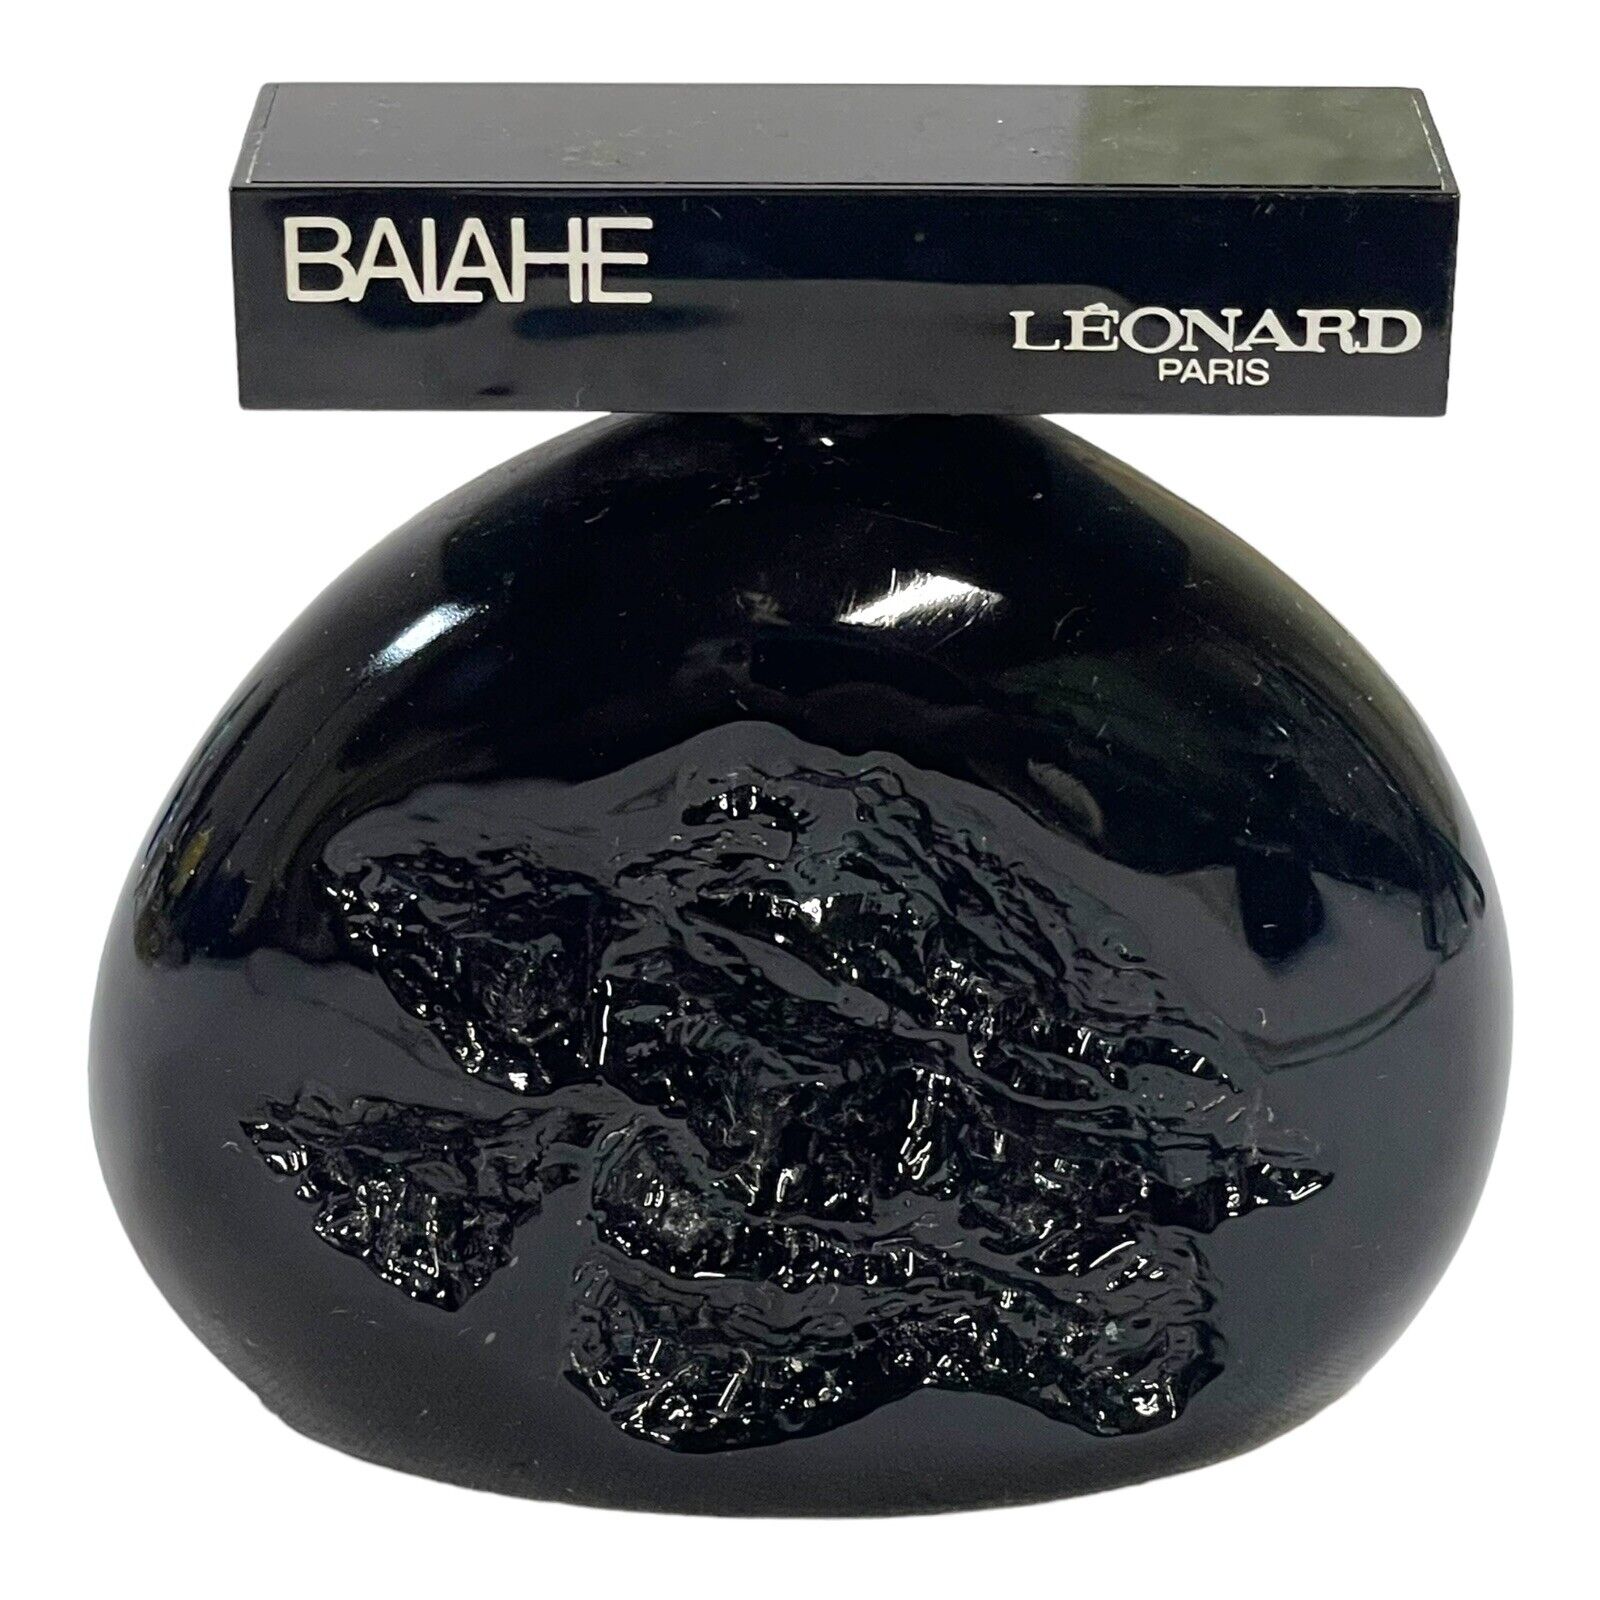 Balahe' by Leonard Paris black glass vintage perfume bottle, empty Art Deco